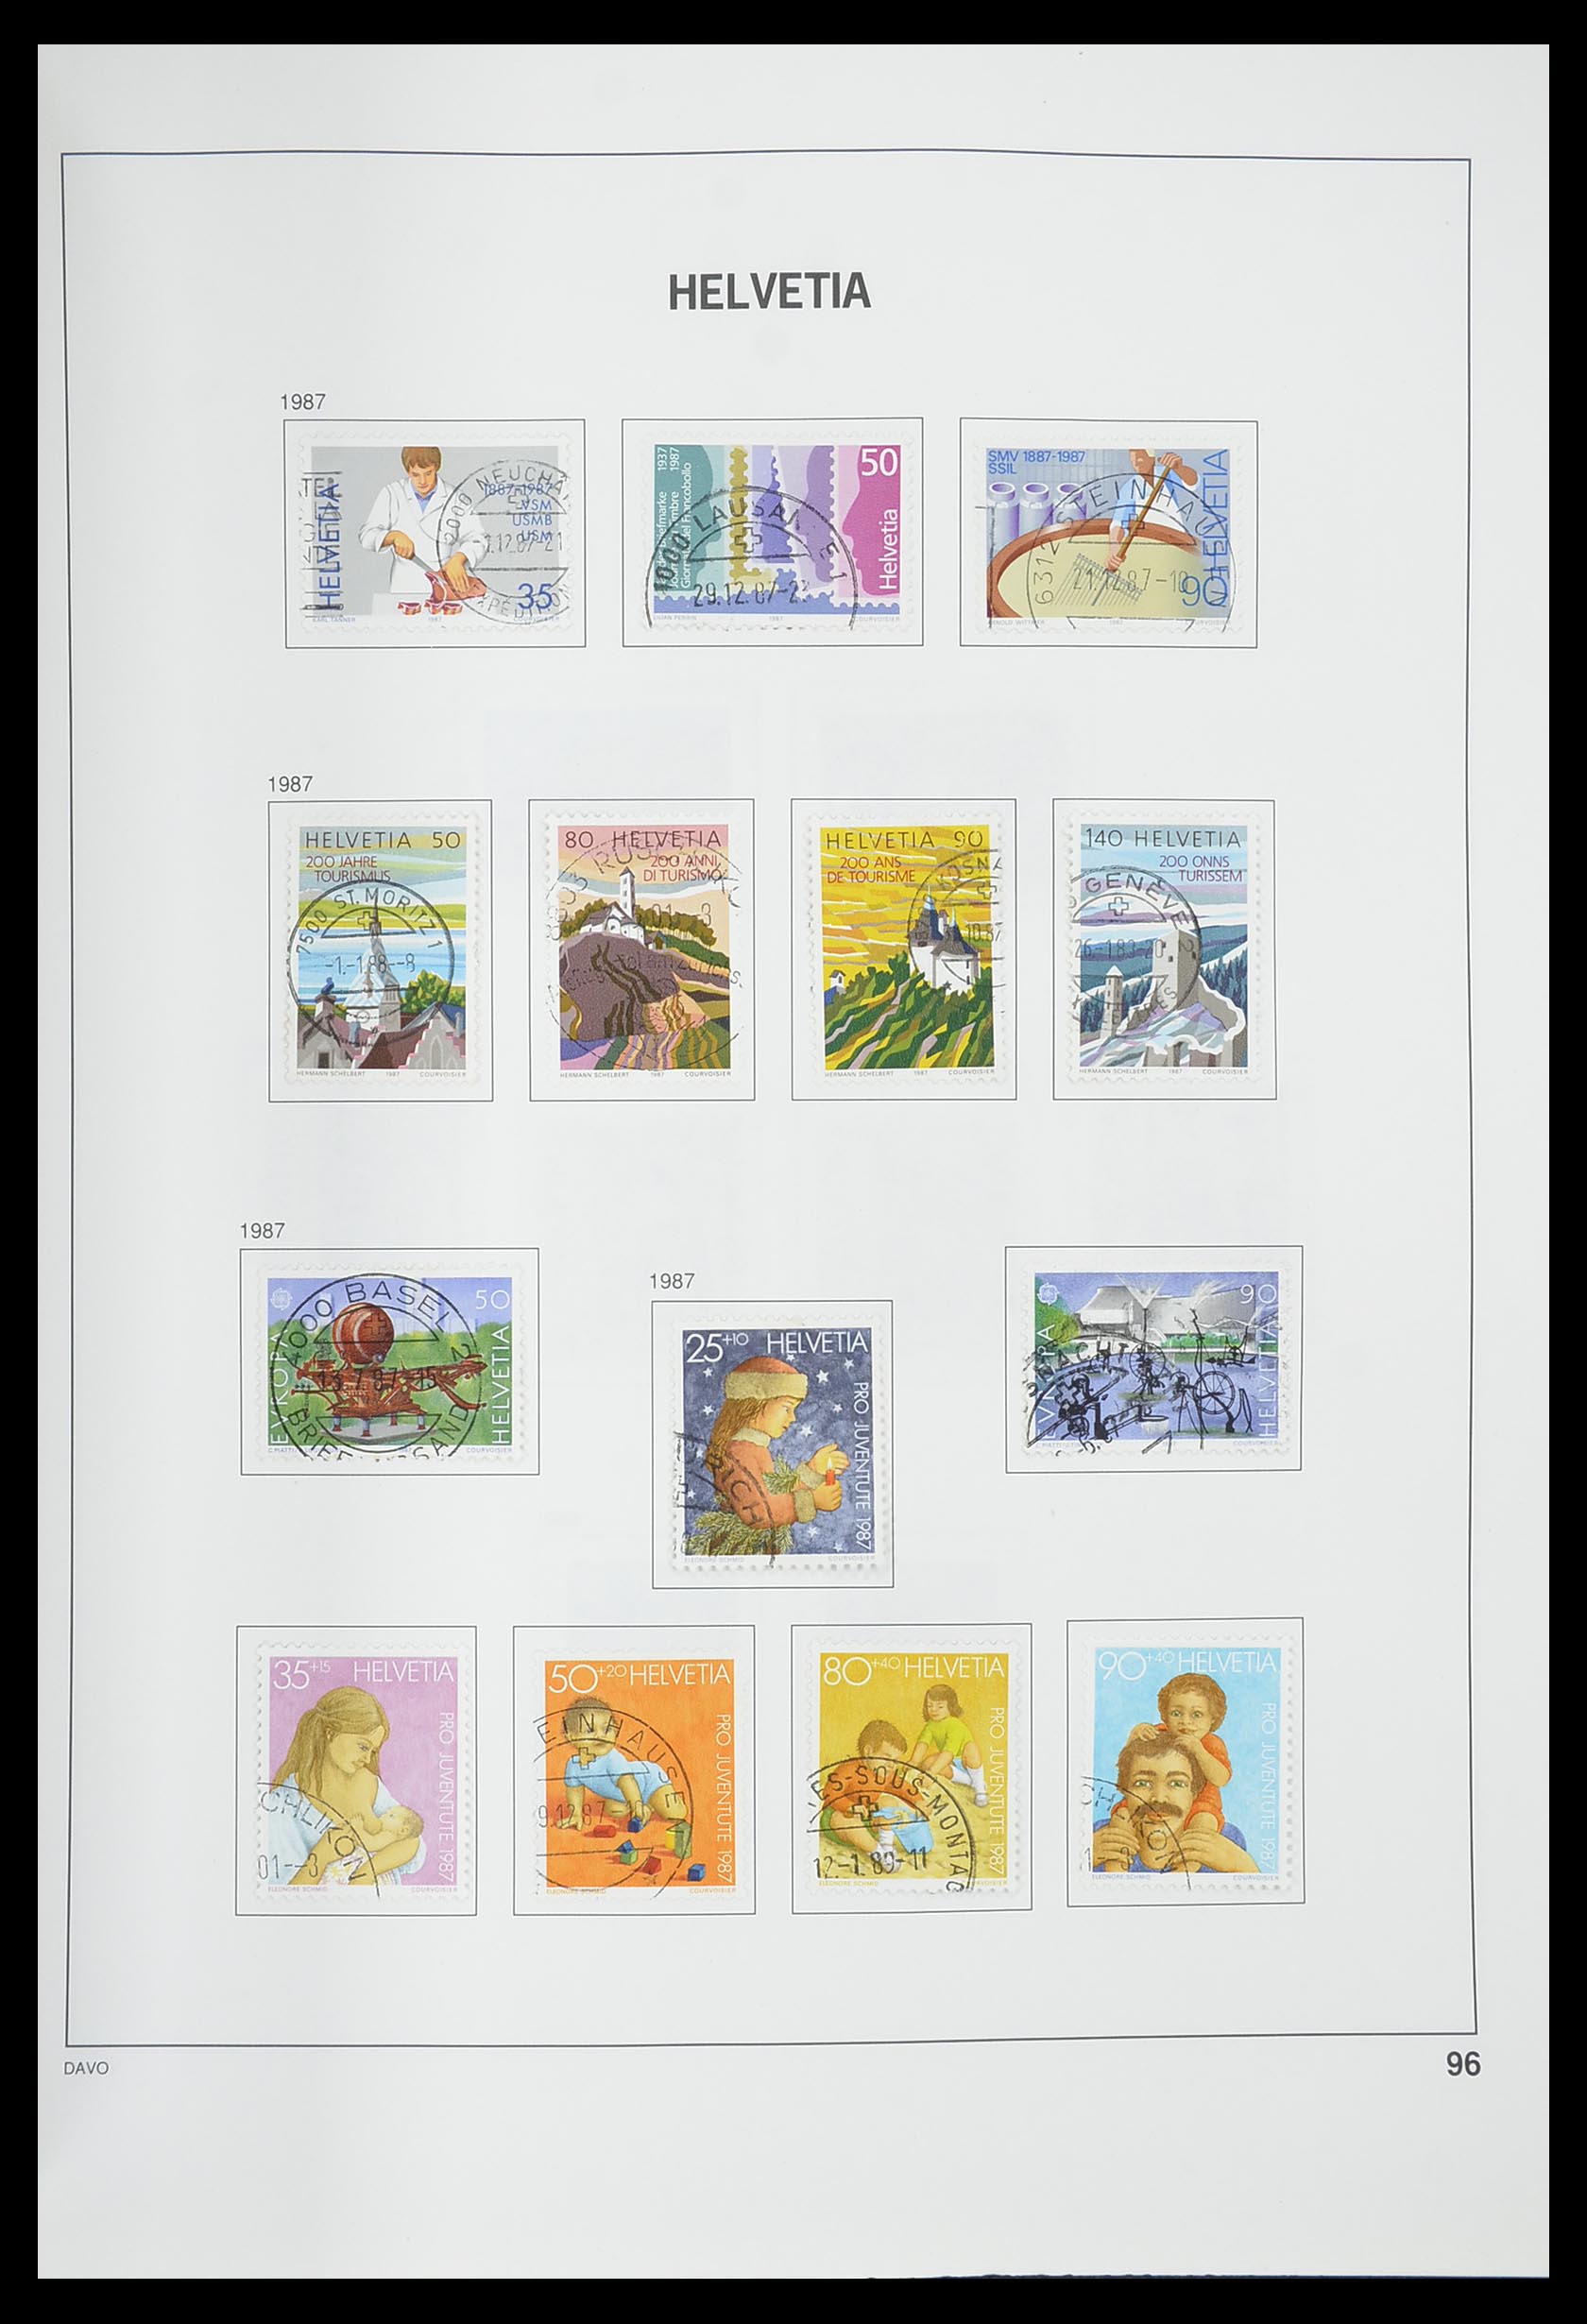 33559 097 - Stamp collection 33559 Switzerland 1850-2000.